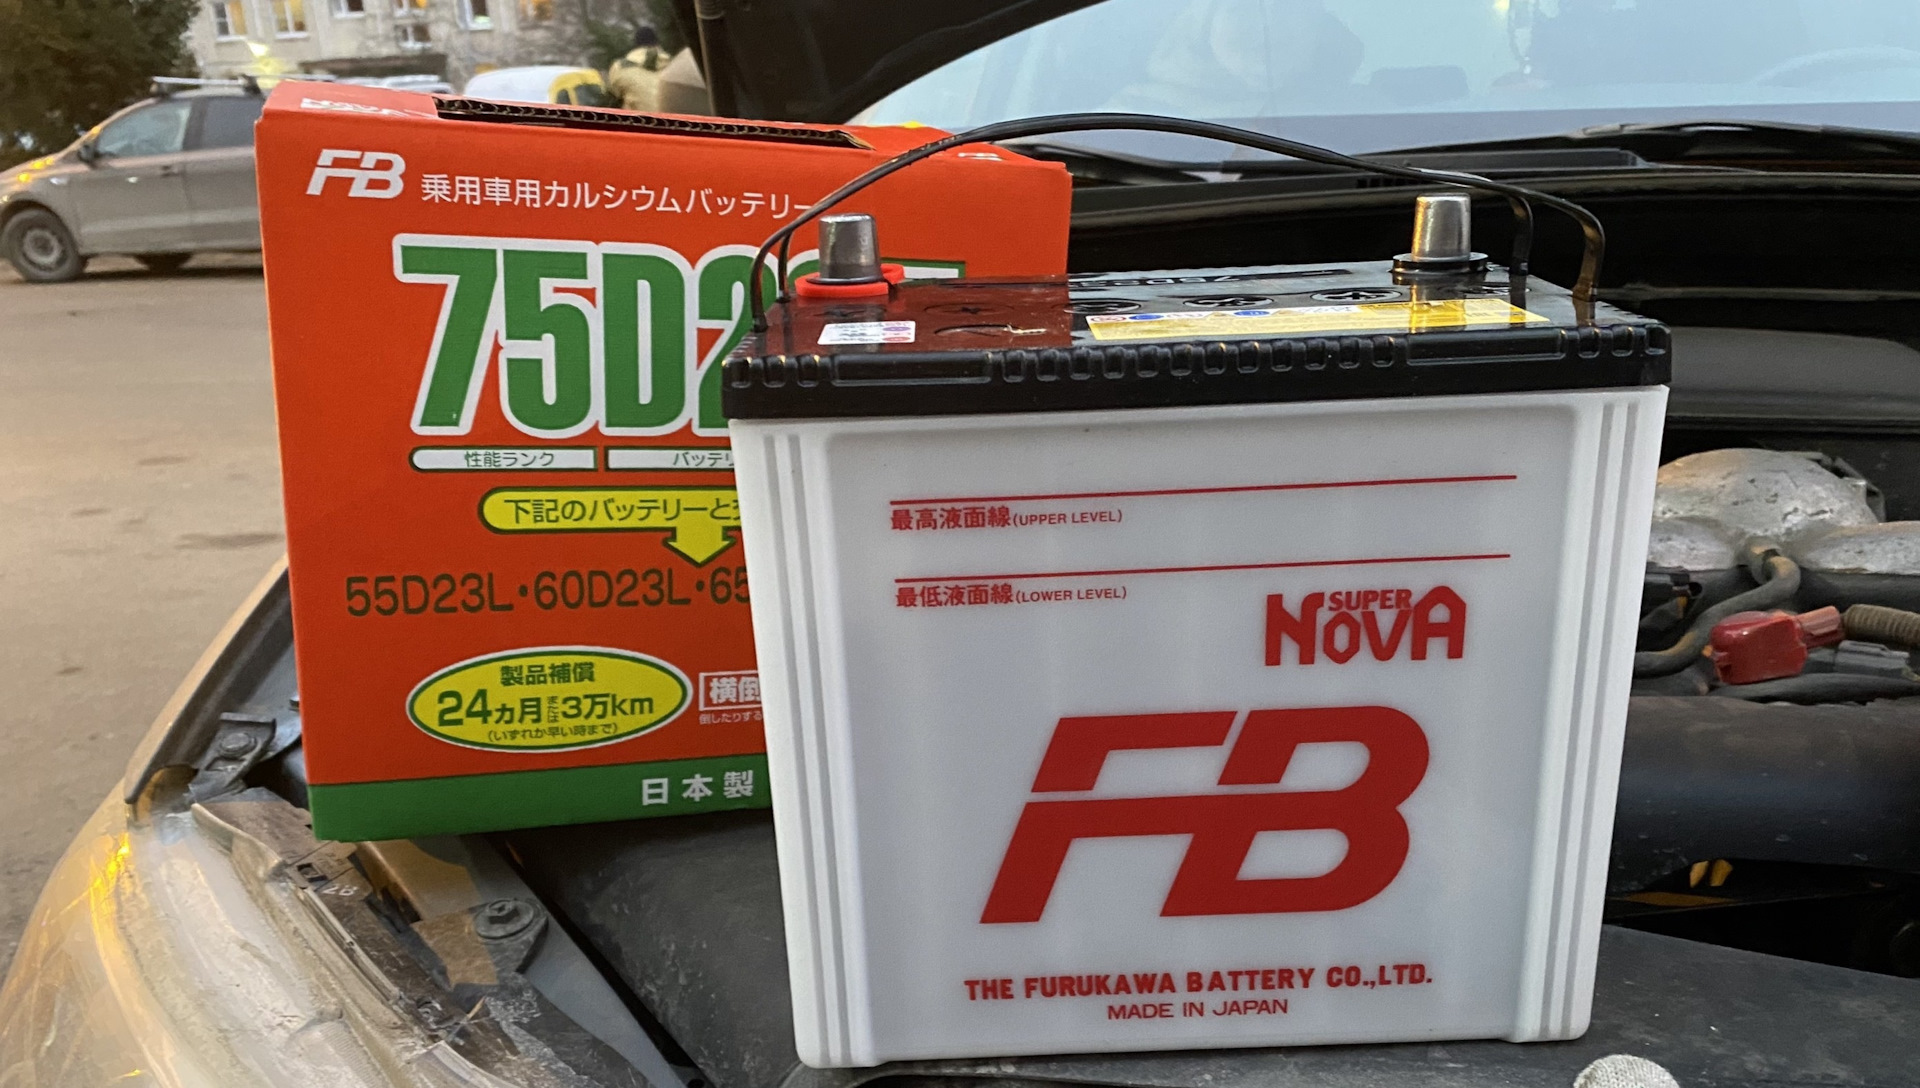 Furukawa battery fb. Fb super Nova 75d23l. Furukawa Battery super Nova 75d23l. Аккумулятор Фурукава 75d23l. Аккумулятор fb super Nova 75d23l.